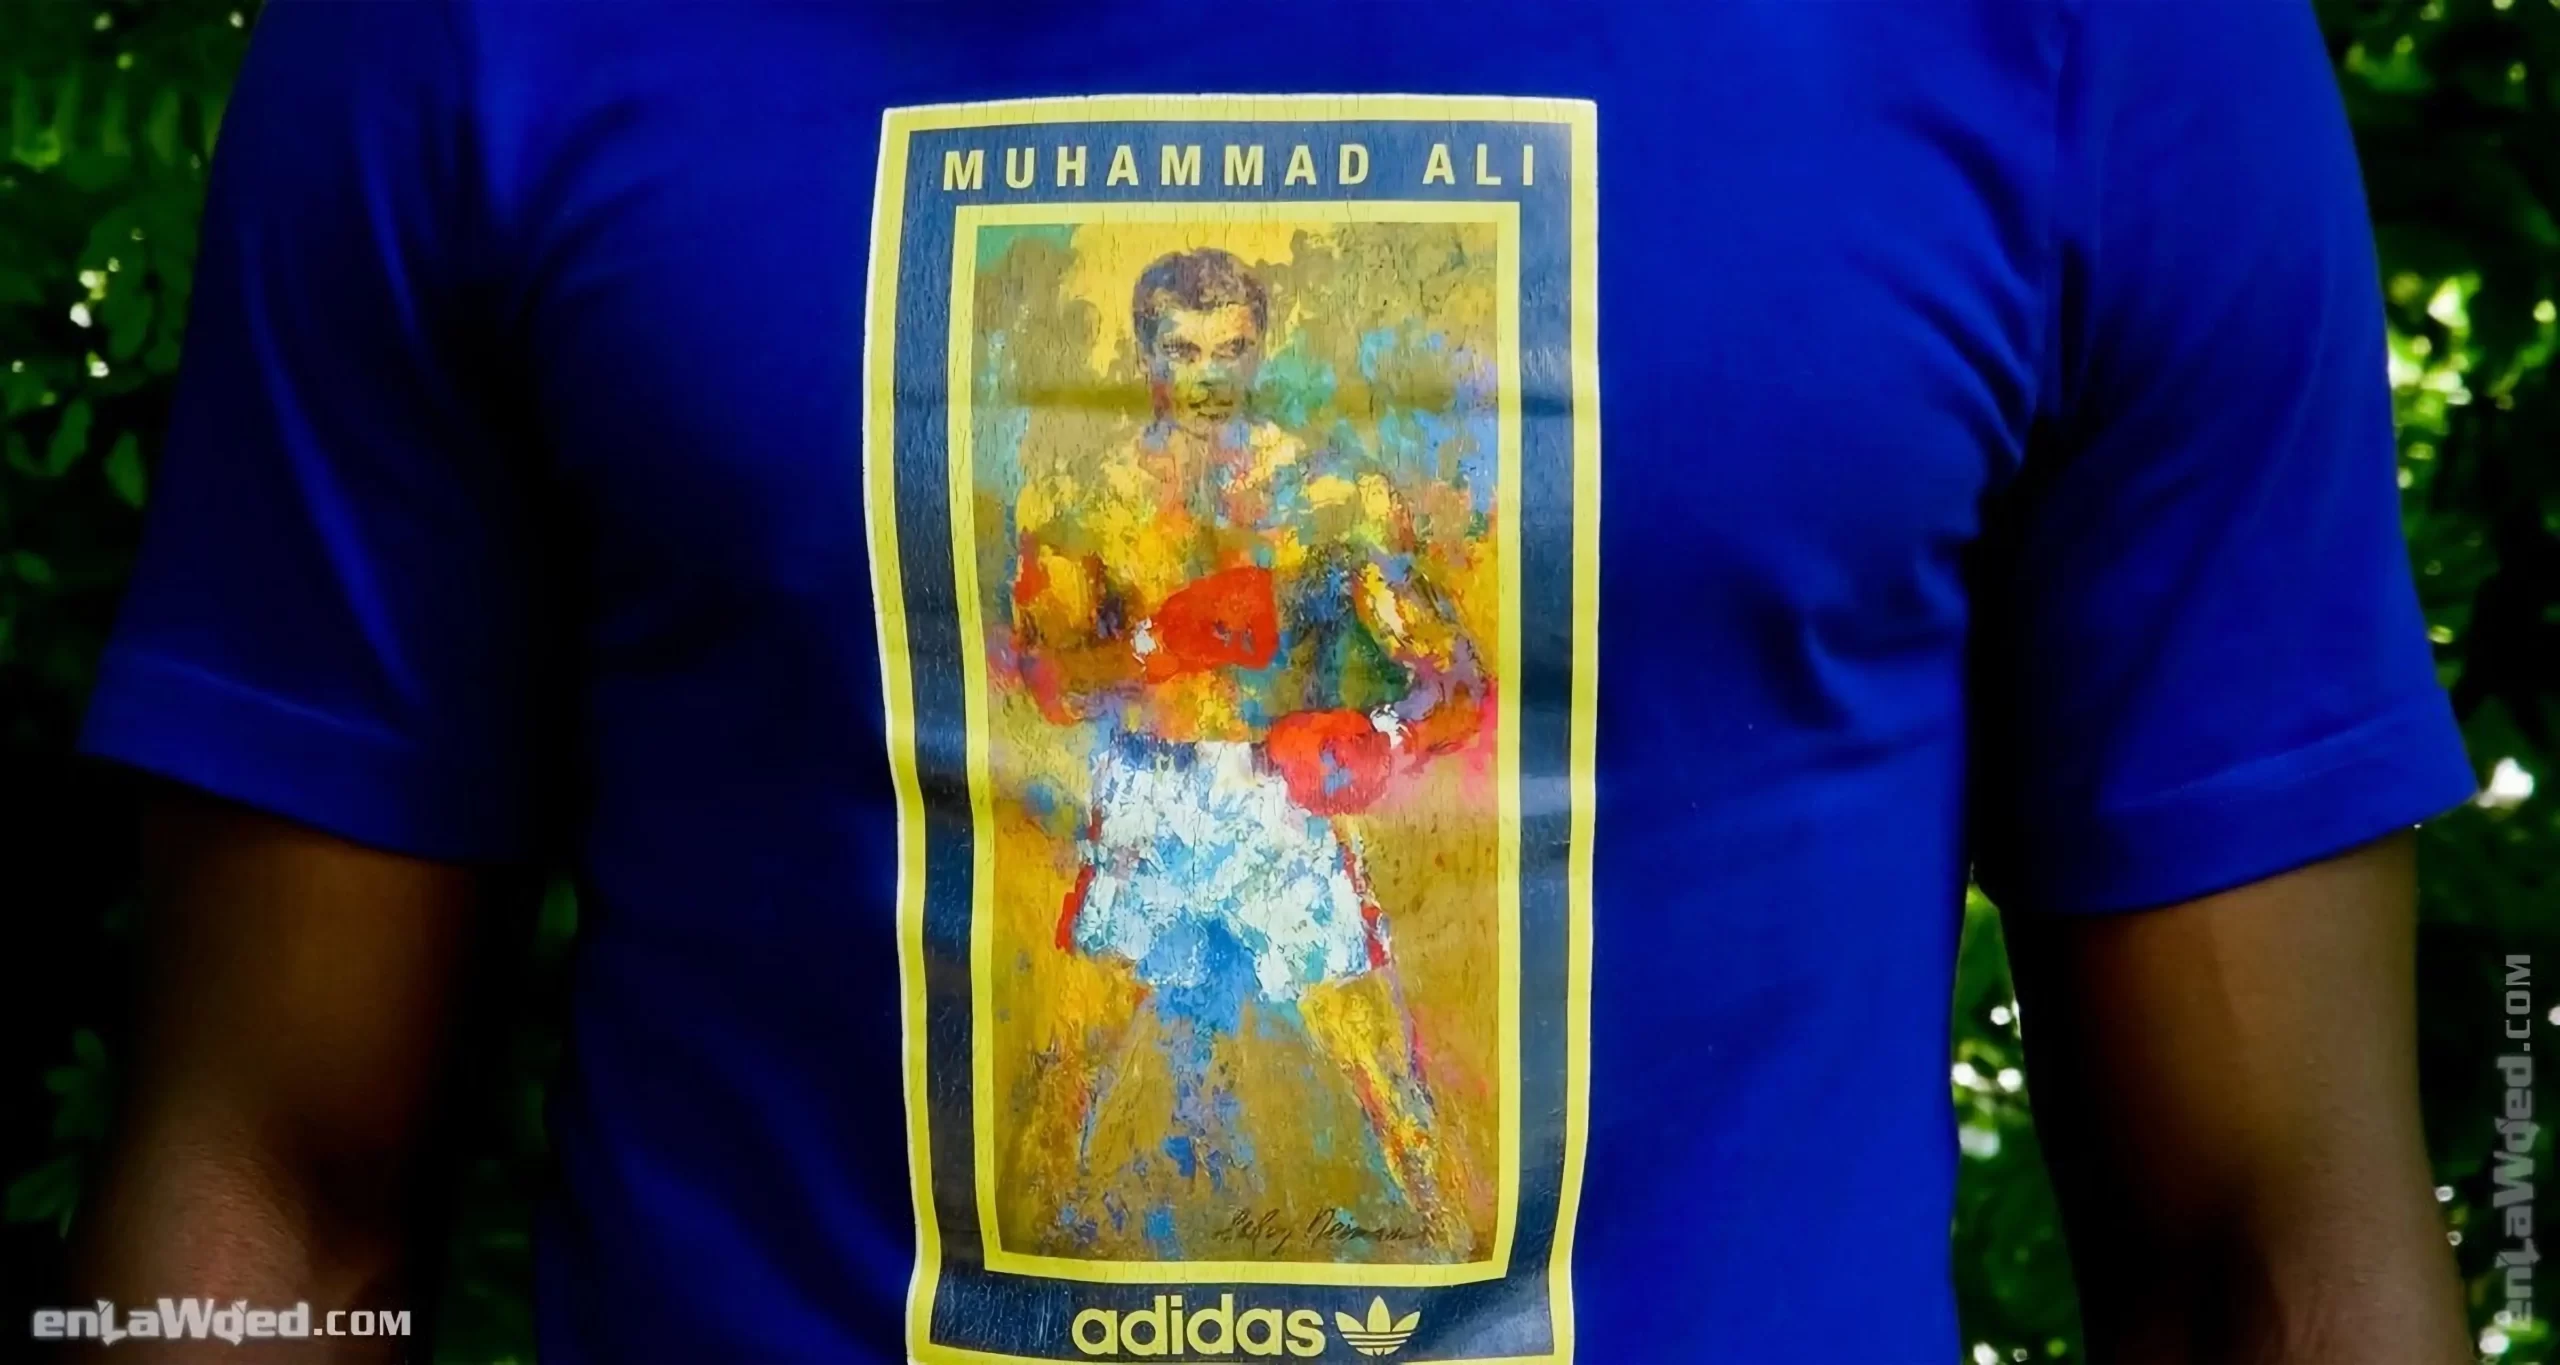 Men’s 2007 Muhammad Ali Respect T-Shirt by Adidas: Tawdry (EnLawded.com file #lmc5rom2mfm7mmqljbe)